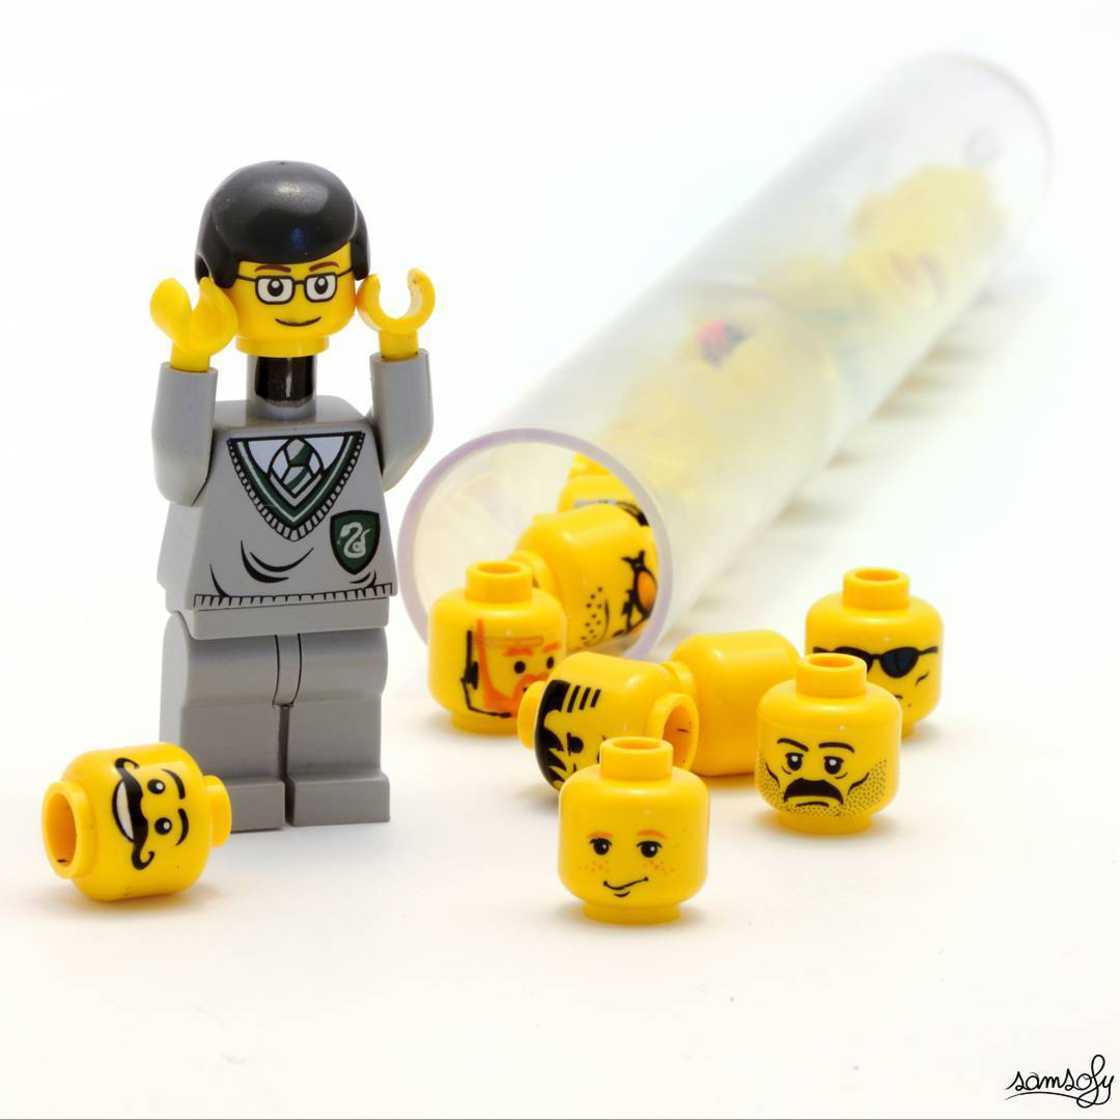 LEGO : un artiste met en scène des minifigs en s'inspirant de la pop culture #4